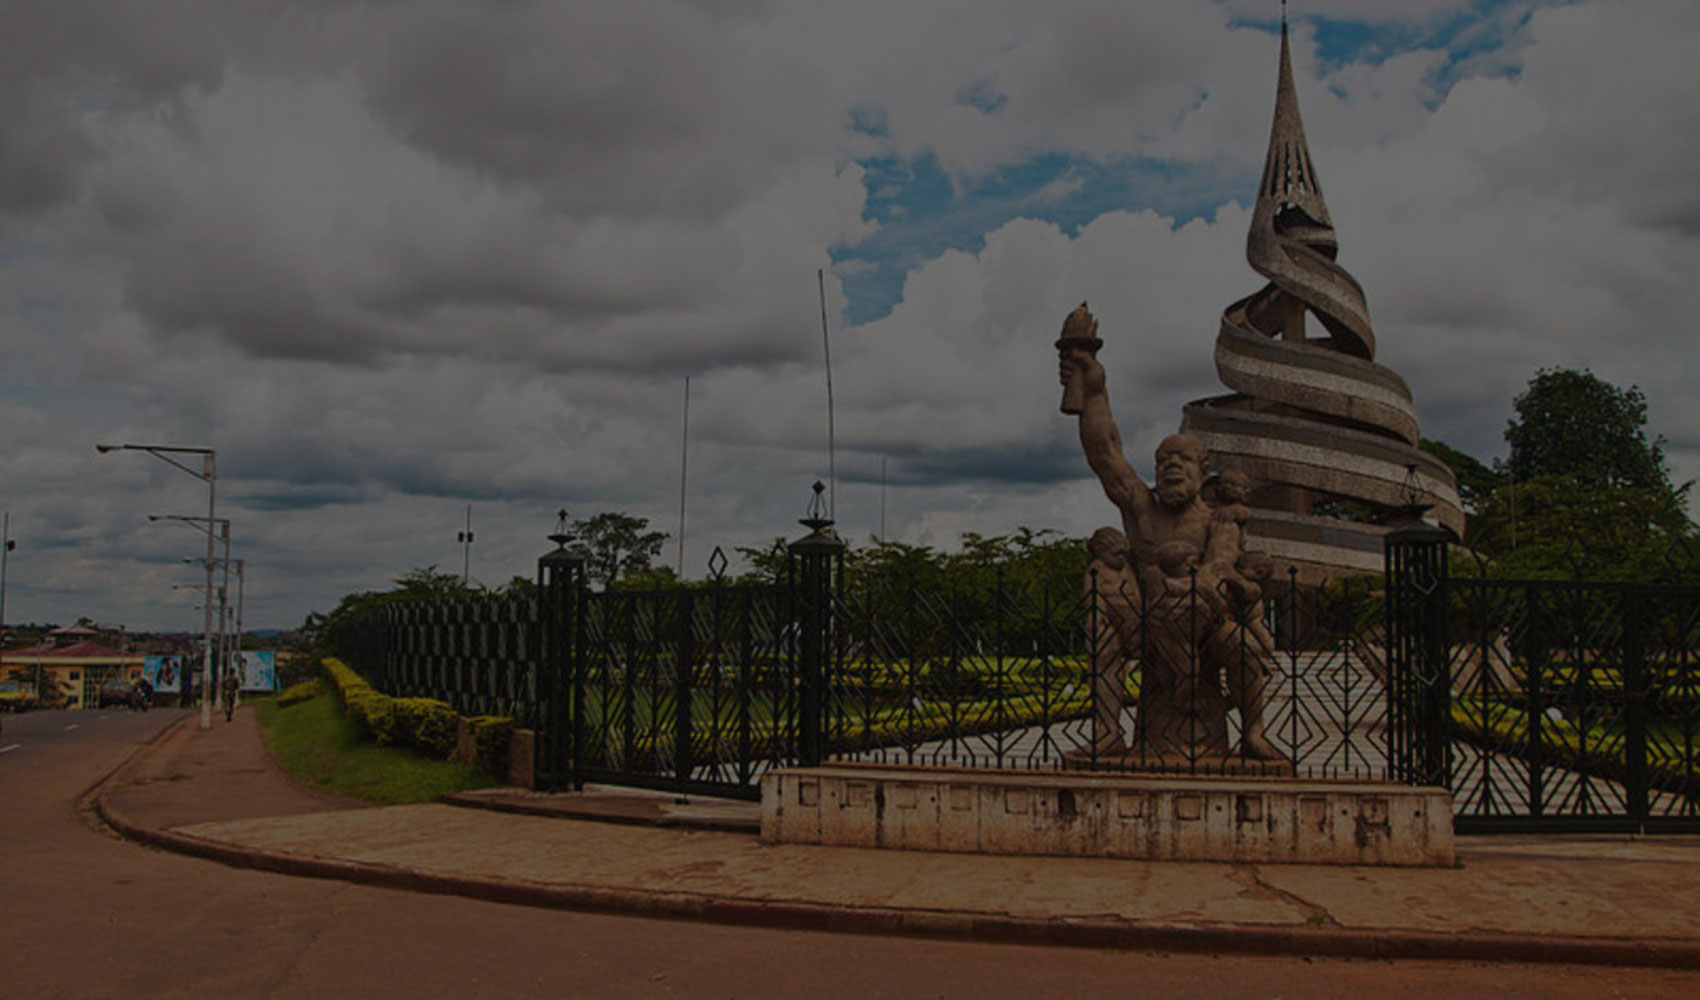 Cameroon: Explore Africa in miniature